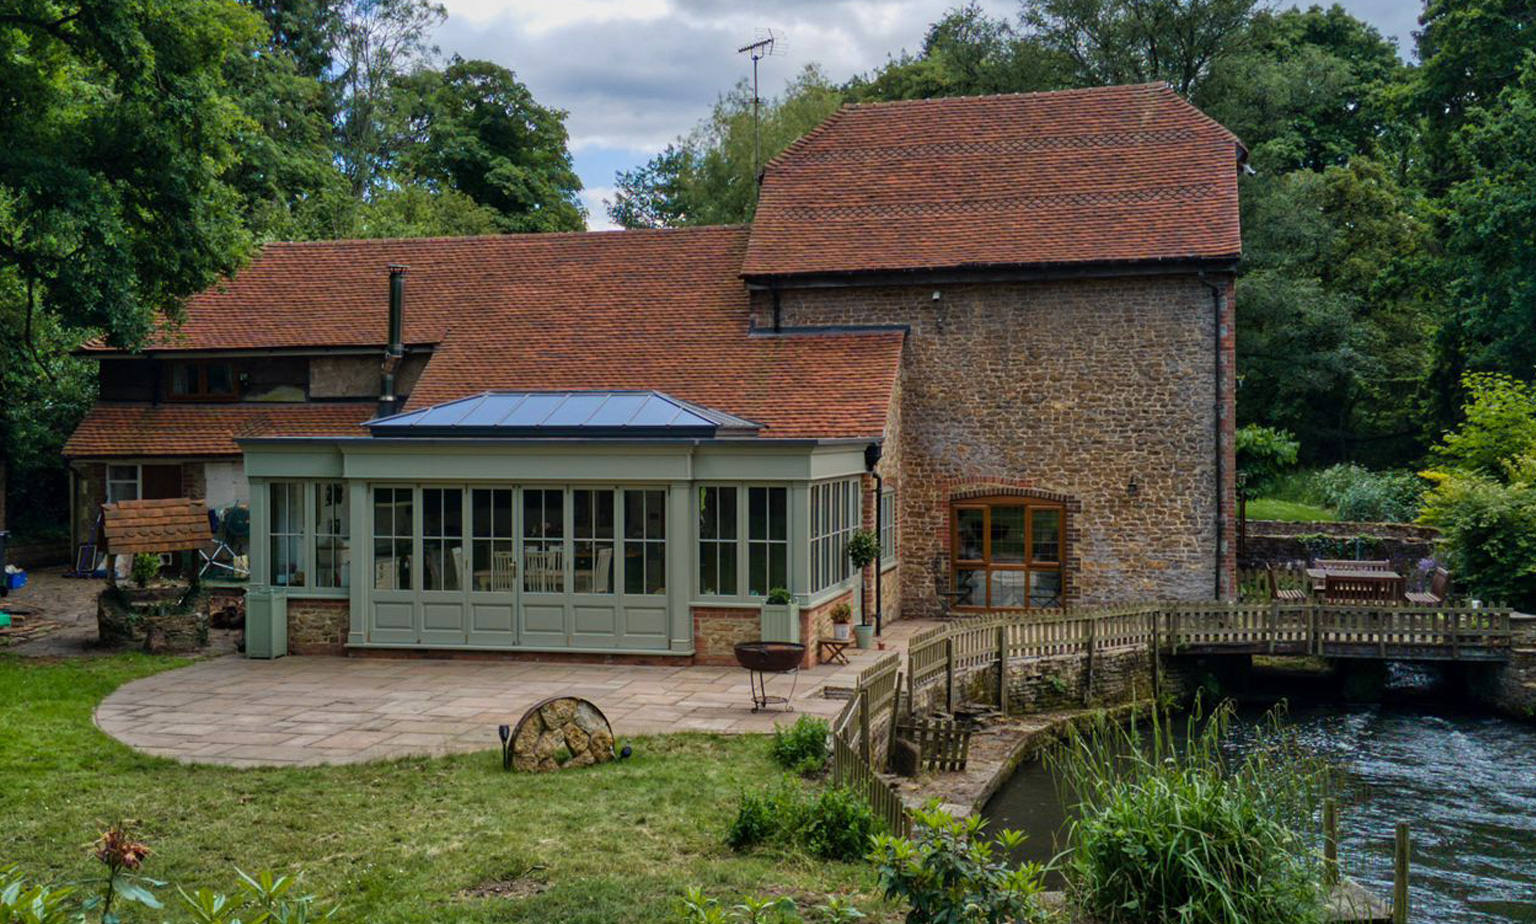 Goodwood Orangeries mill house on the Surrey